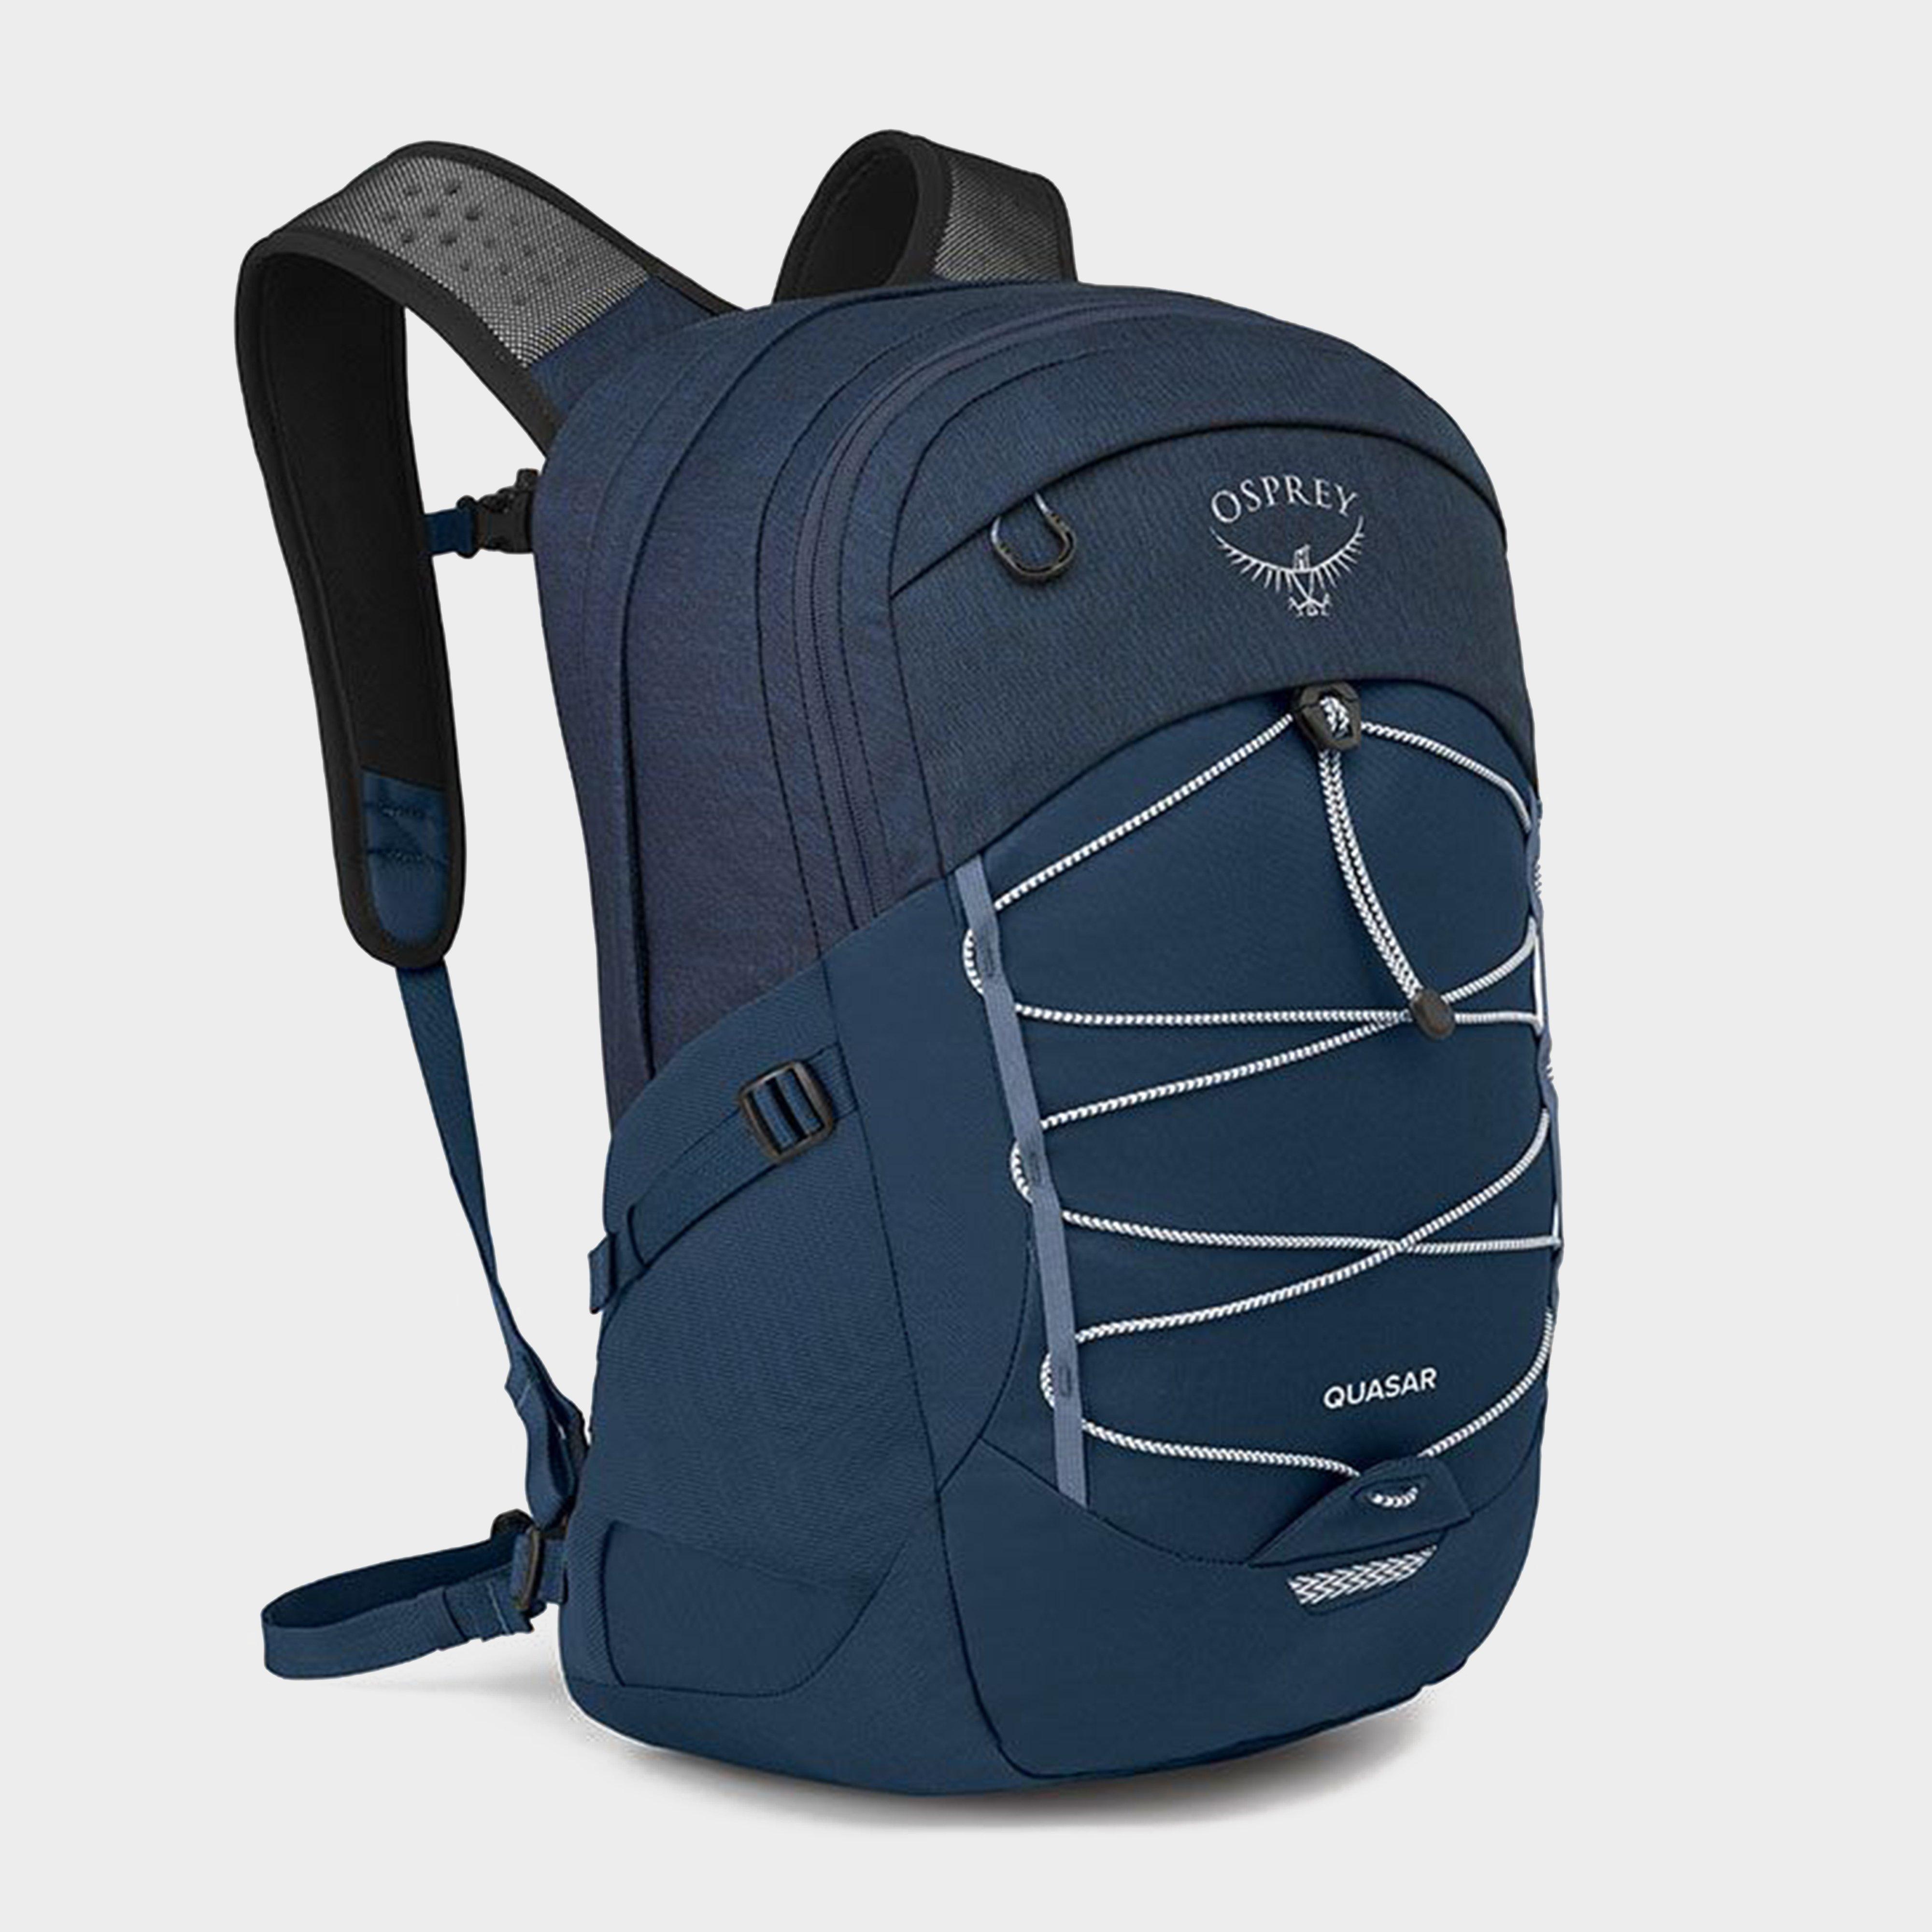  Osprey Quasar Backpack, Blue